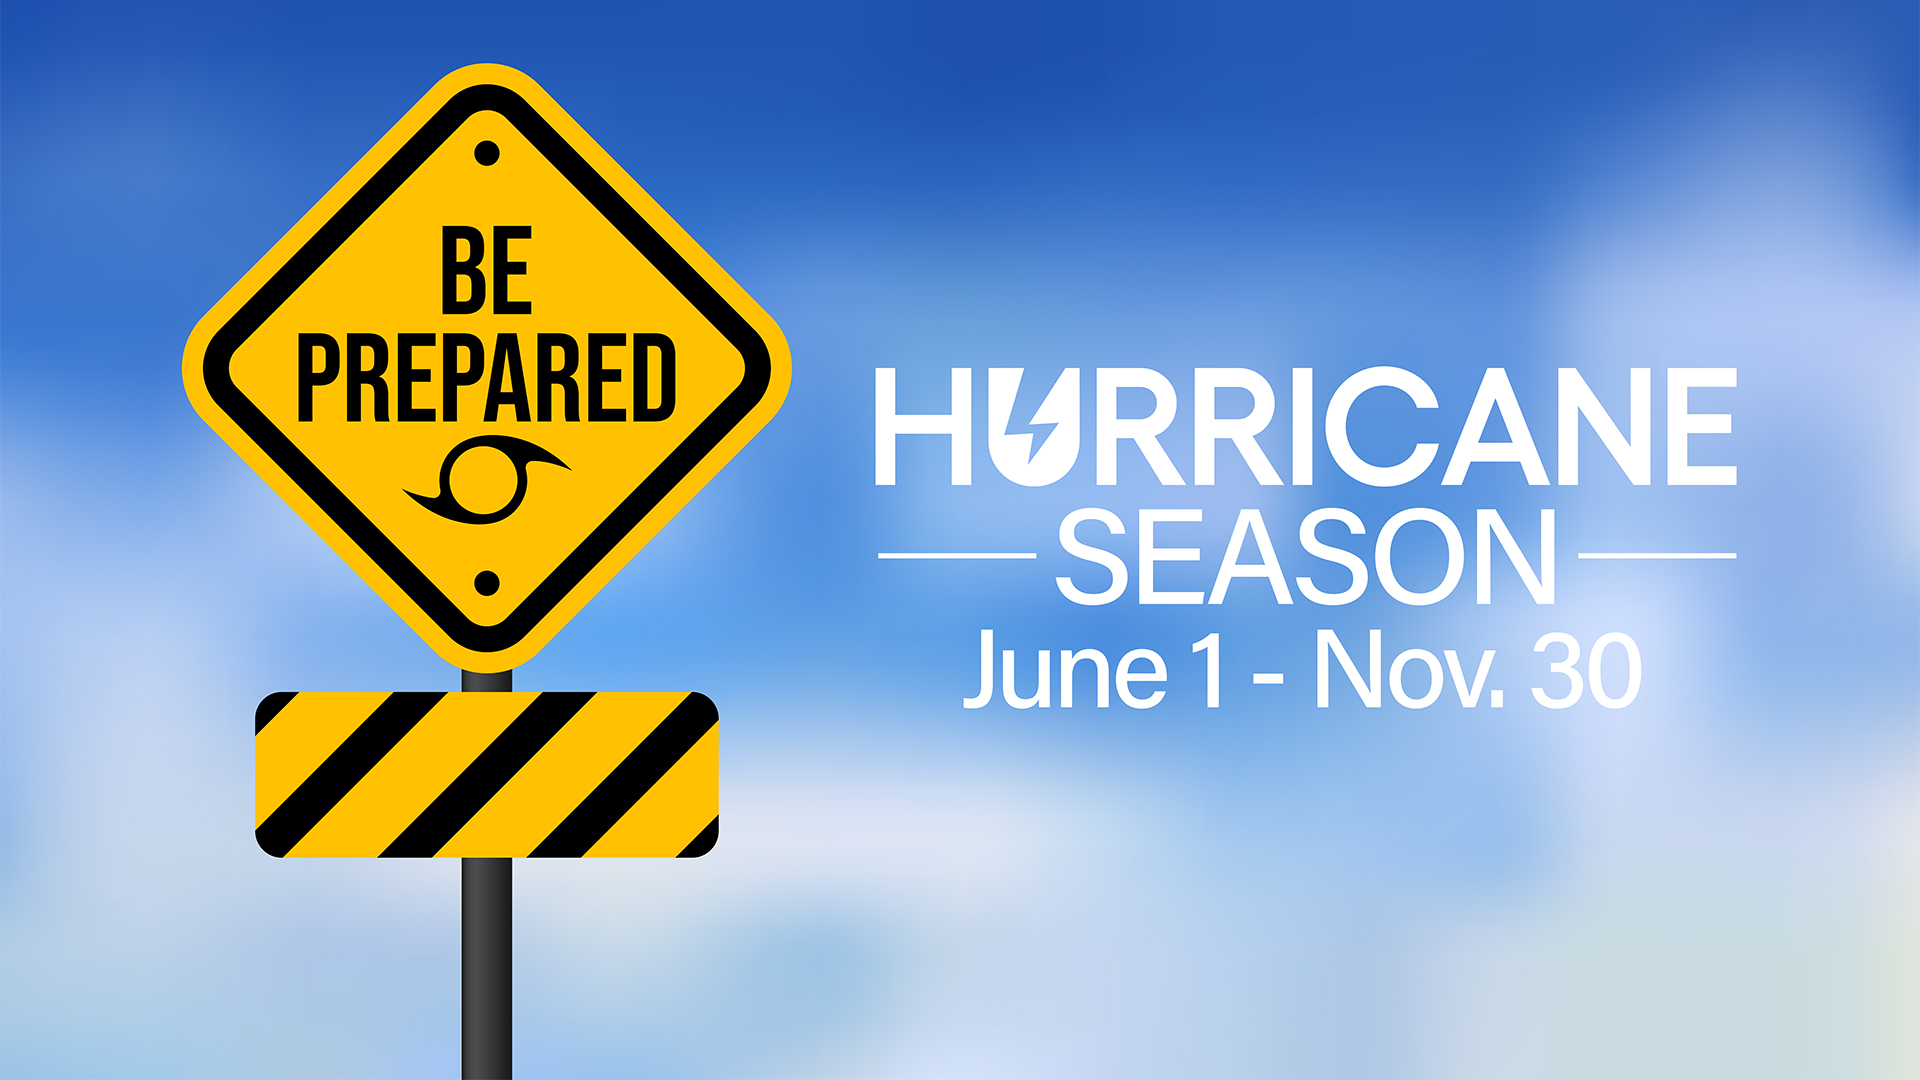 https://newsroom.cpsenergy.com/wp-content/uploads/2022/07/Hurricane-Season-Be-Prepared-img-070122.jpg